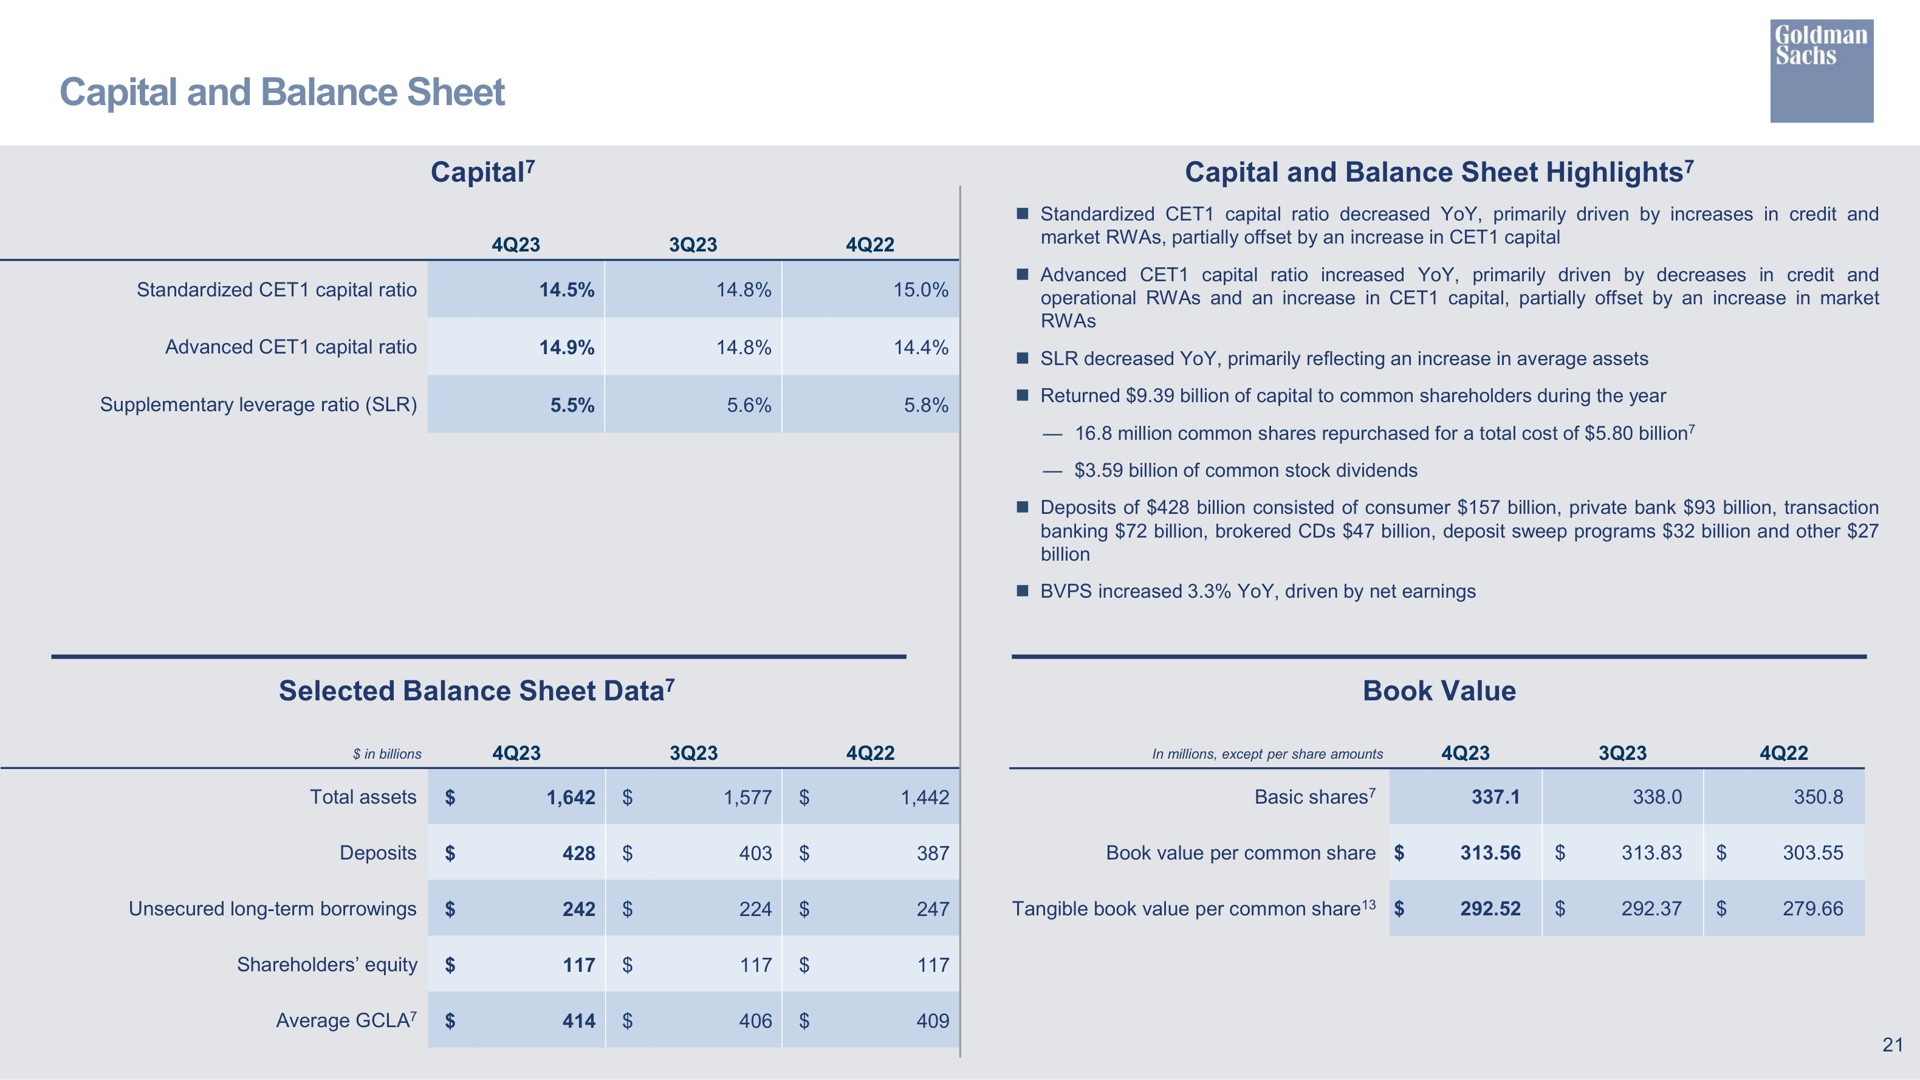 capital and balance sheet capital capital and balance sheet highlights selected balance sheet data book value data | Goldman Sachs